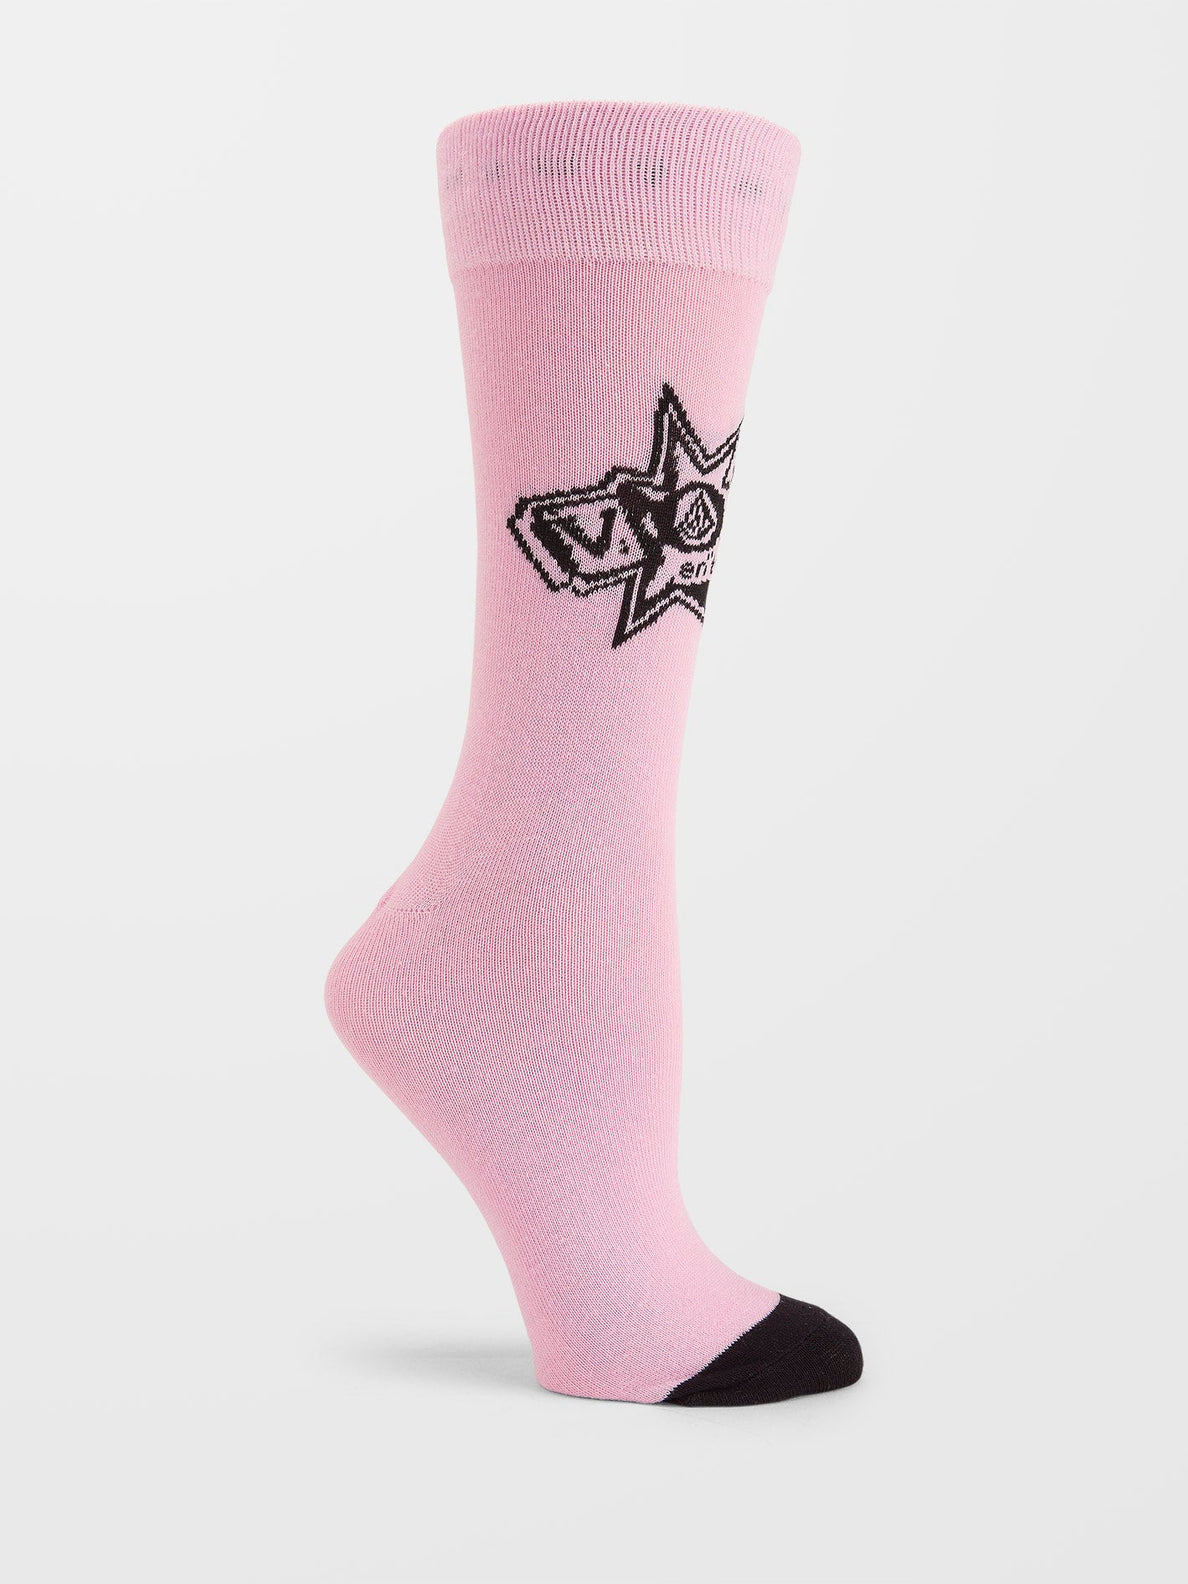 Calcetin Chica Volcom V Ent Sock Premium Reef Pink | Calcetines | Volcom Shop | surfdevils.com